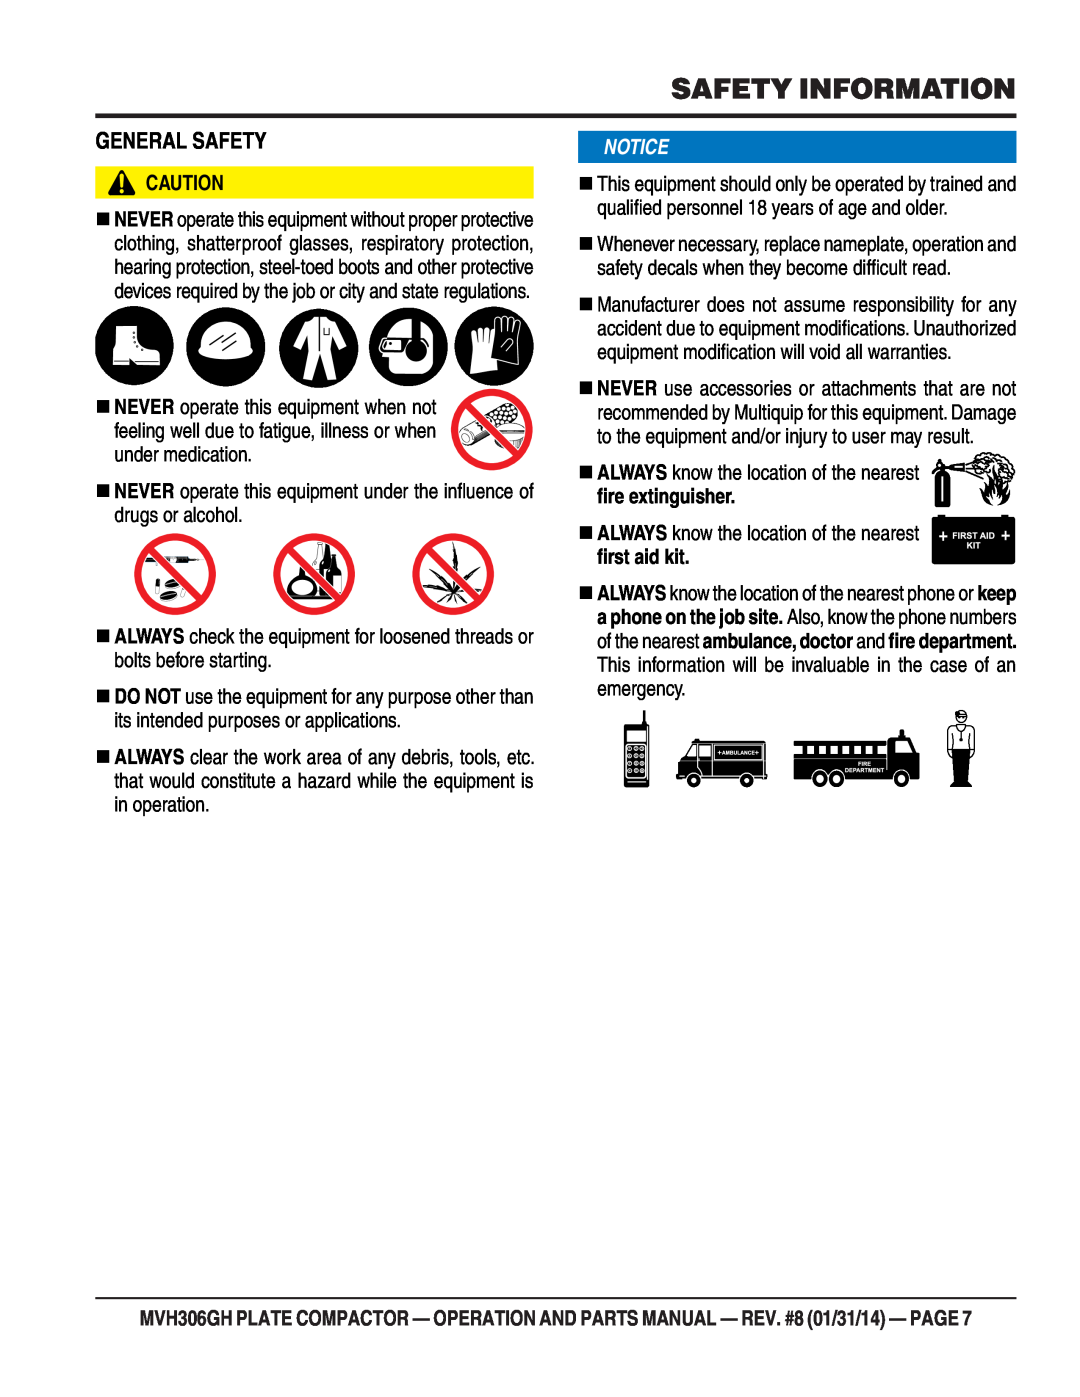 Multiquip MVH306GH manual General Safety, Safety Information, ﬁre extinguisher, ﬁrst aid kit 